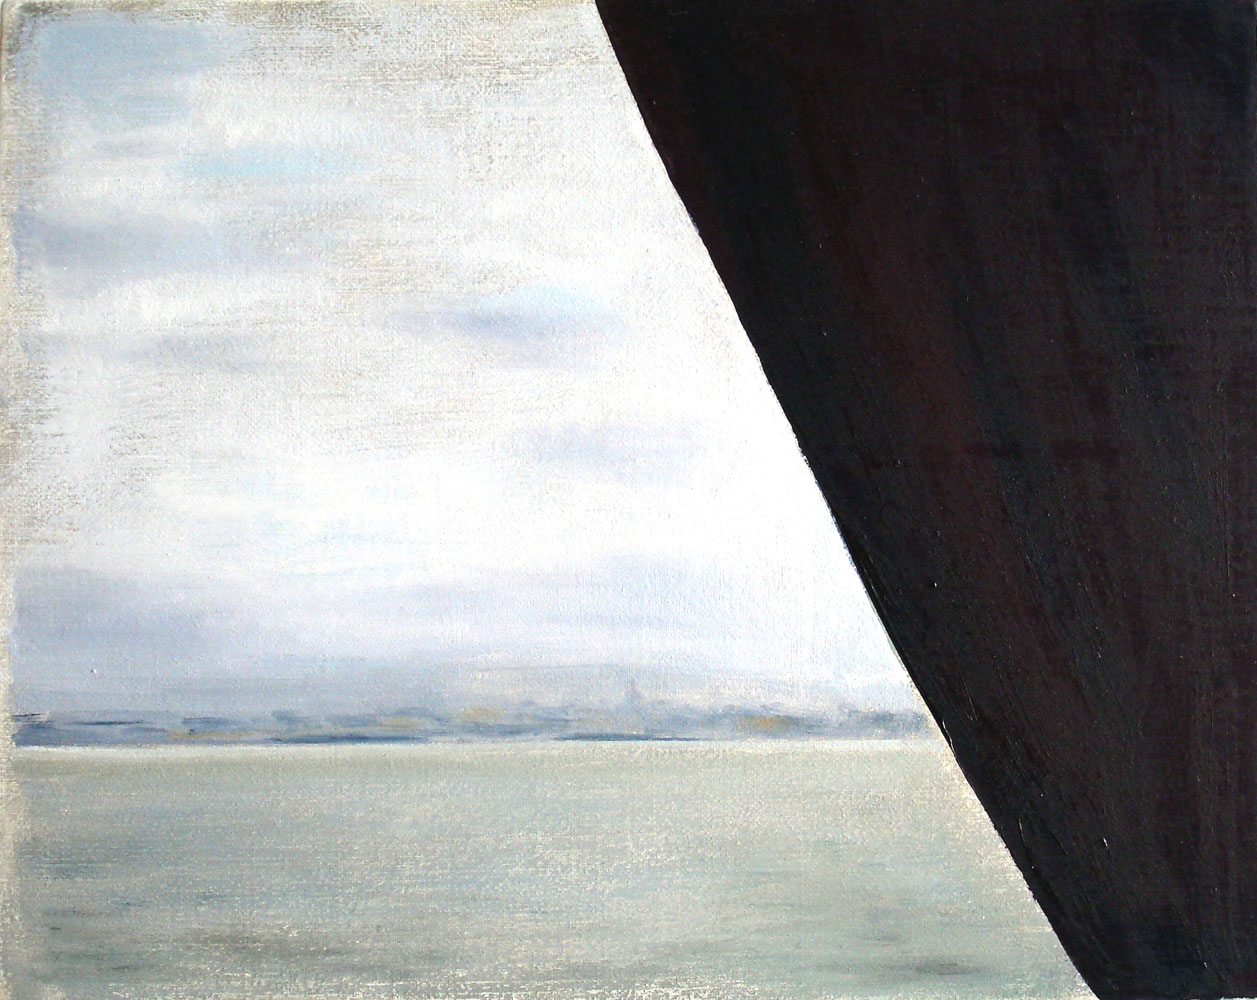   Winter Ferry    2007, oil on canvas, 24 x 30cm     